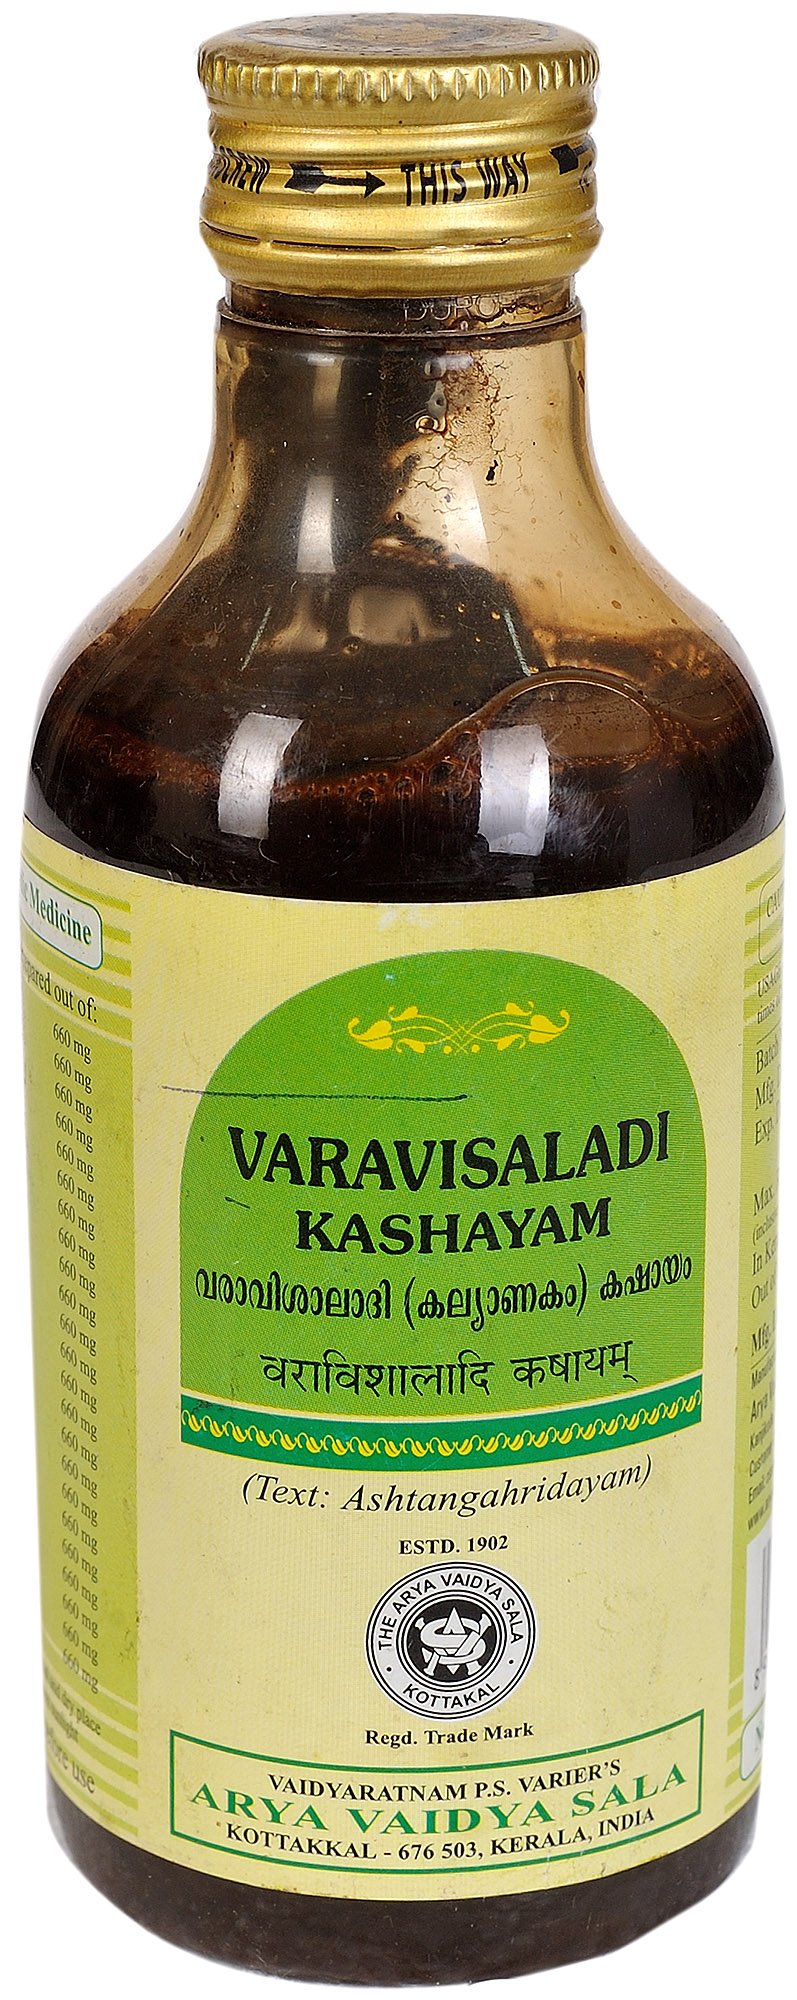 Varavisaladi Kashayam - book cover